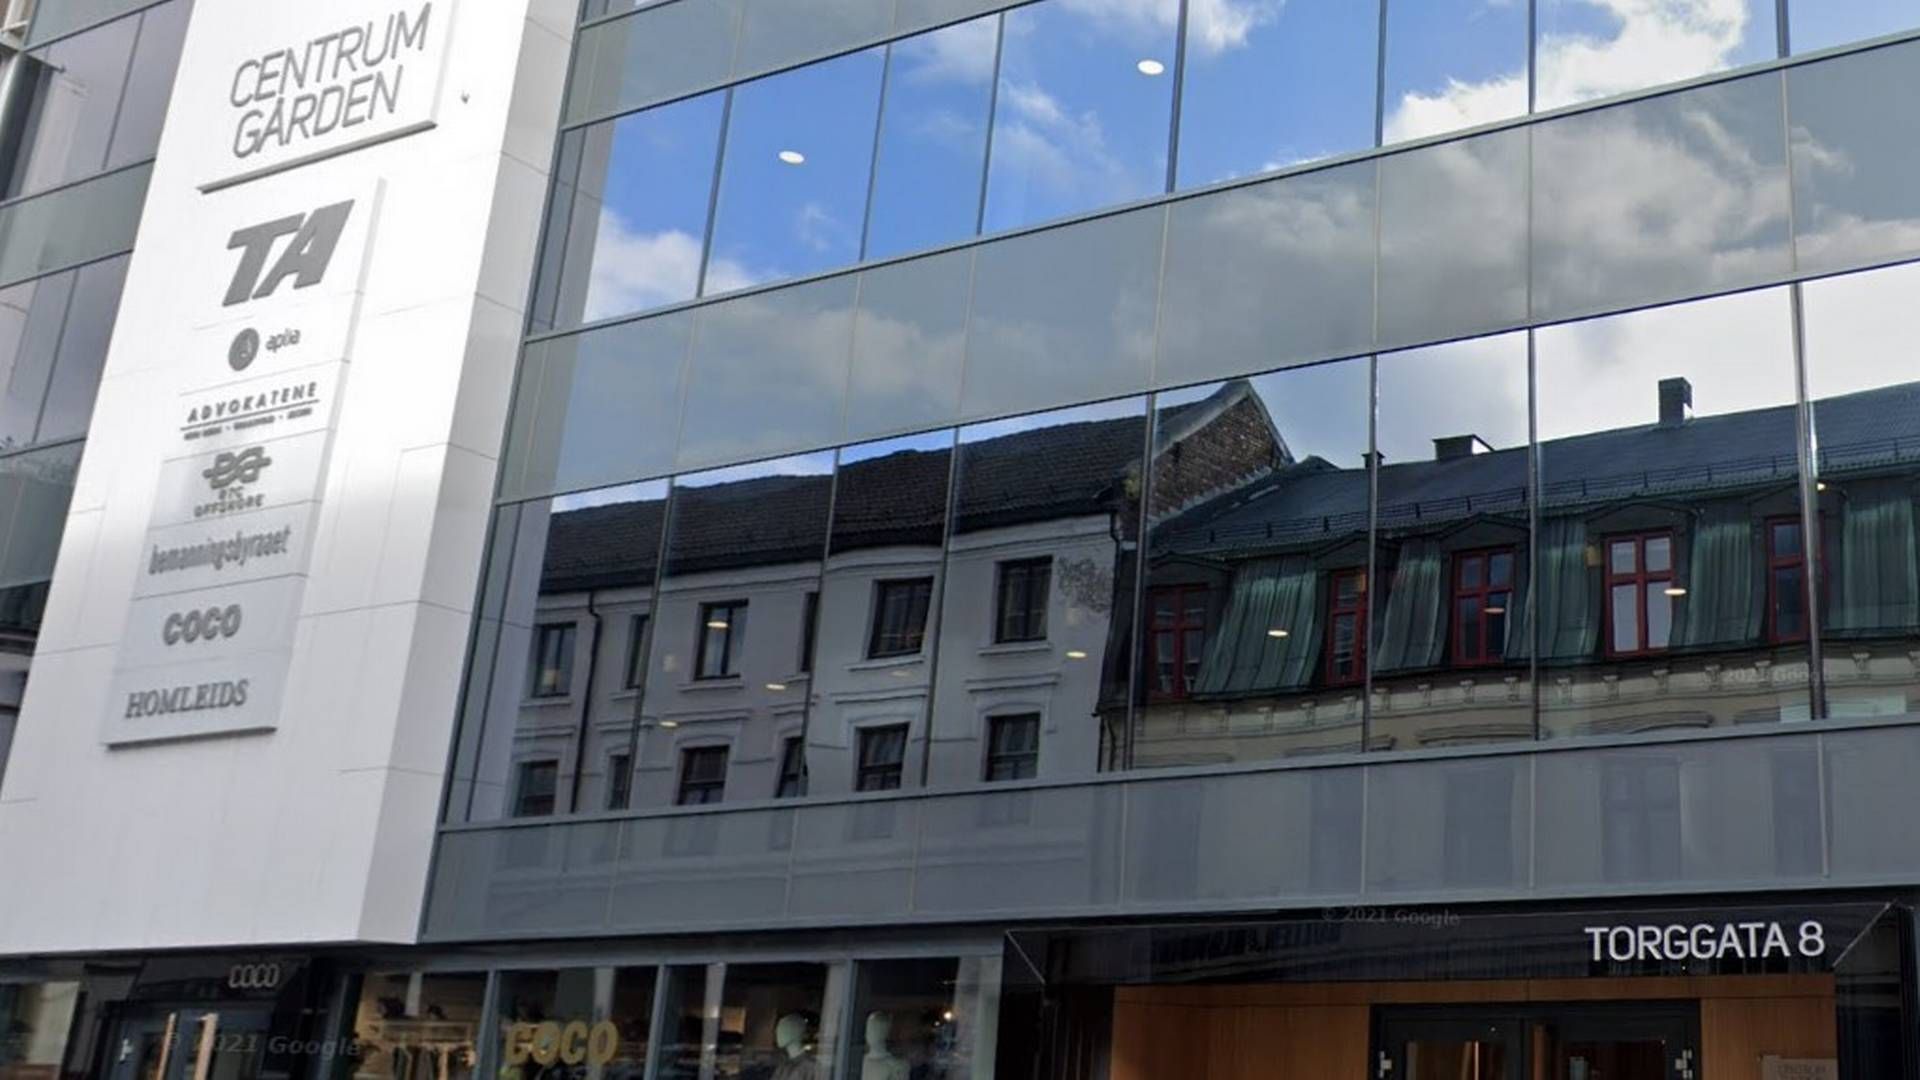 Advokatfirmaet Jessen har kontorer i Centrumgården i Skien. | Foto: Google Street View